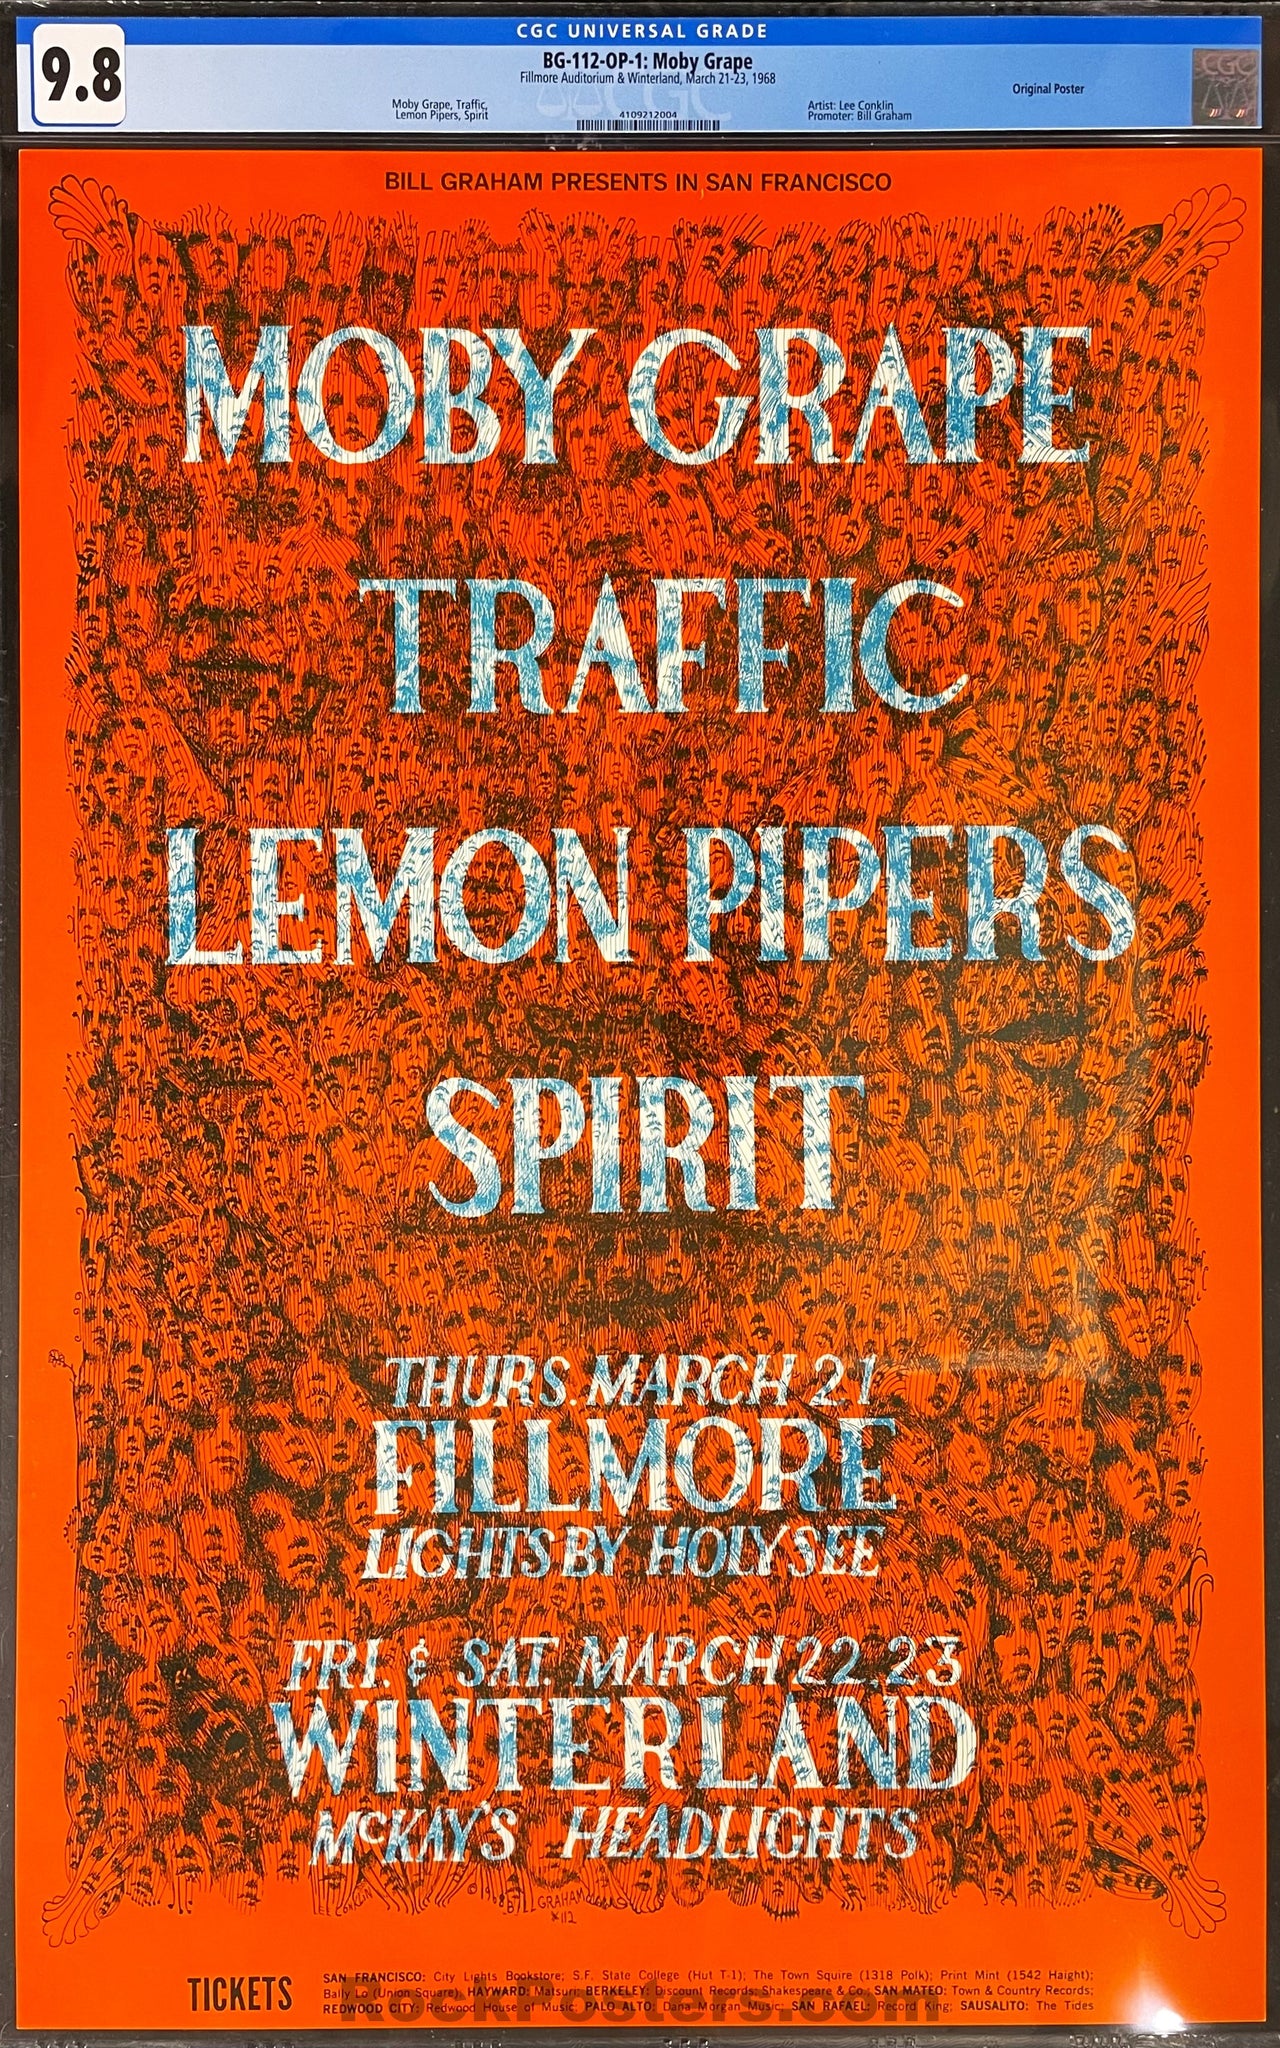 AUCTION - BG-112 - Moby Grape - 1968 Poster - Fillmore Auditorium & Winterland - CGC Graded 9.8